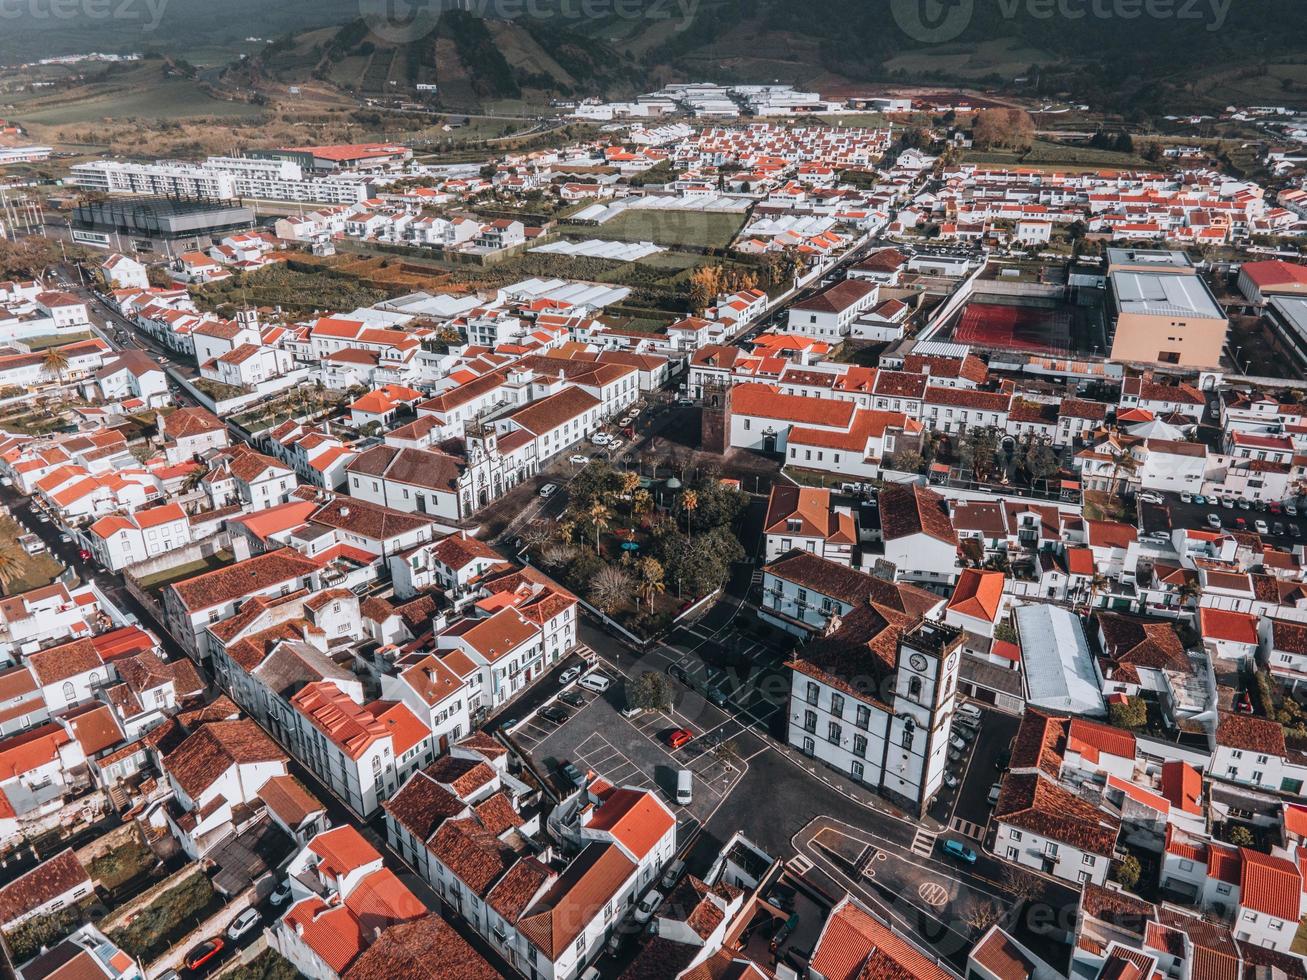 Drone view of Vila Franca do Campo in Sao Miguel, Azores photo